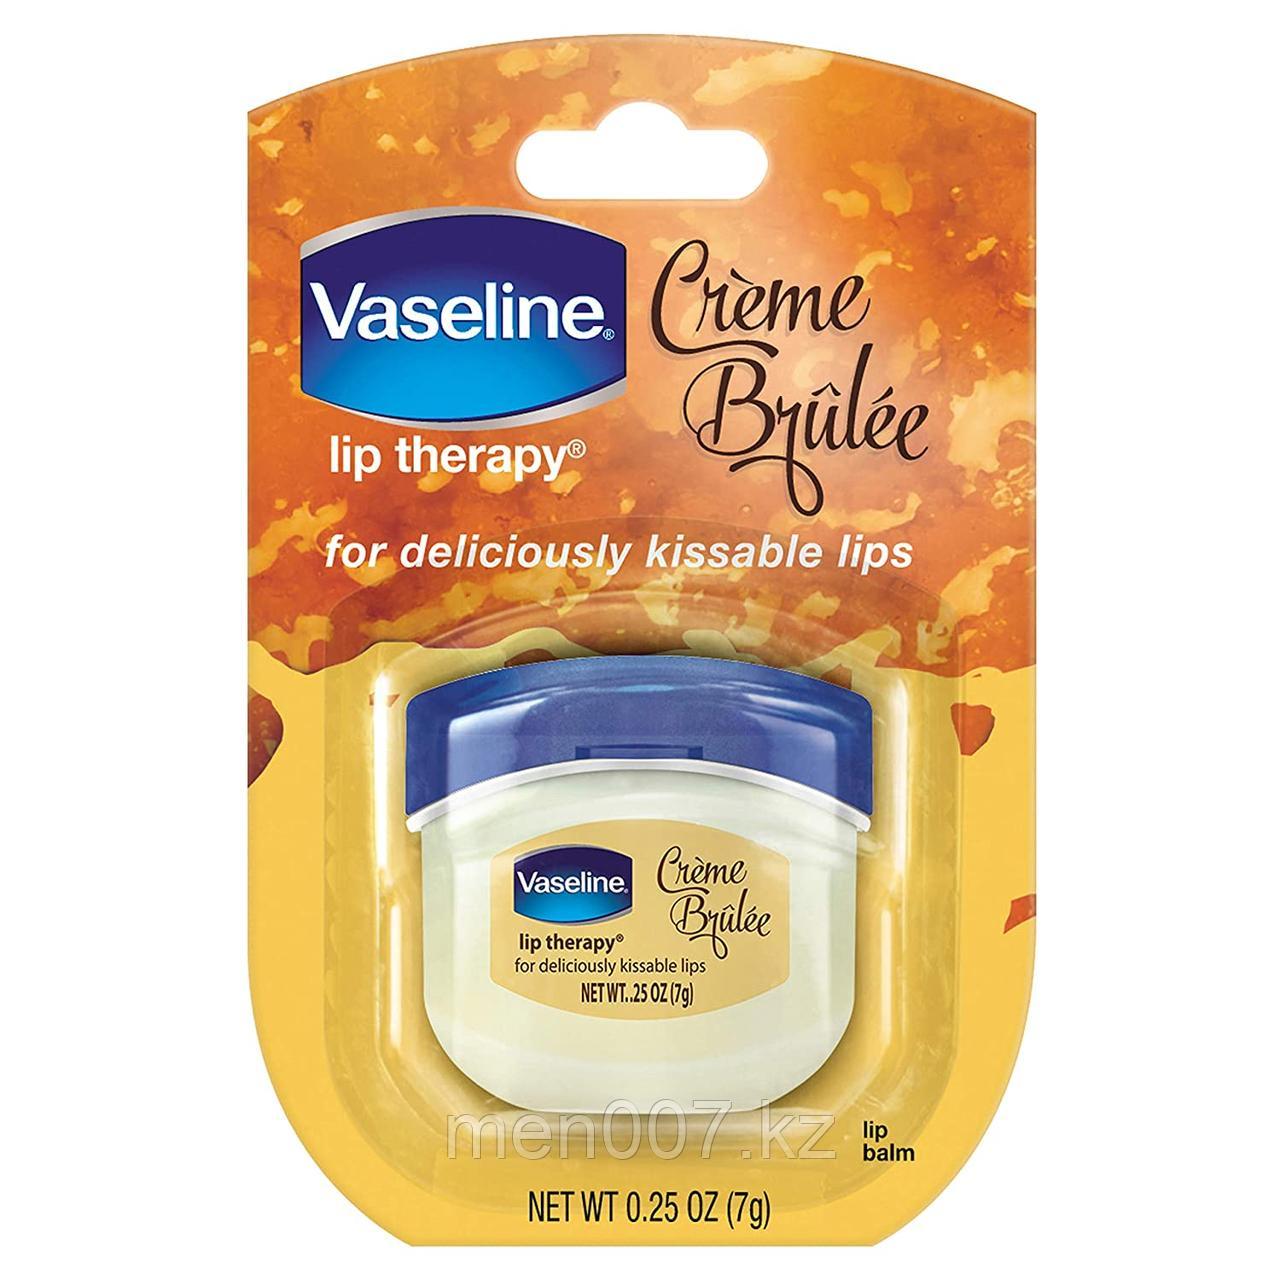 Vaseline Creme Brulee (Бальзам вазелин для губ крем-брюле) 7 грамм